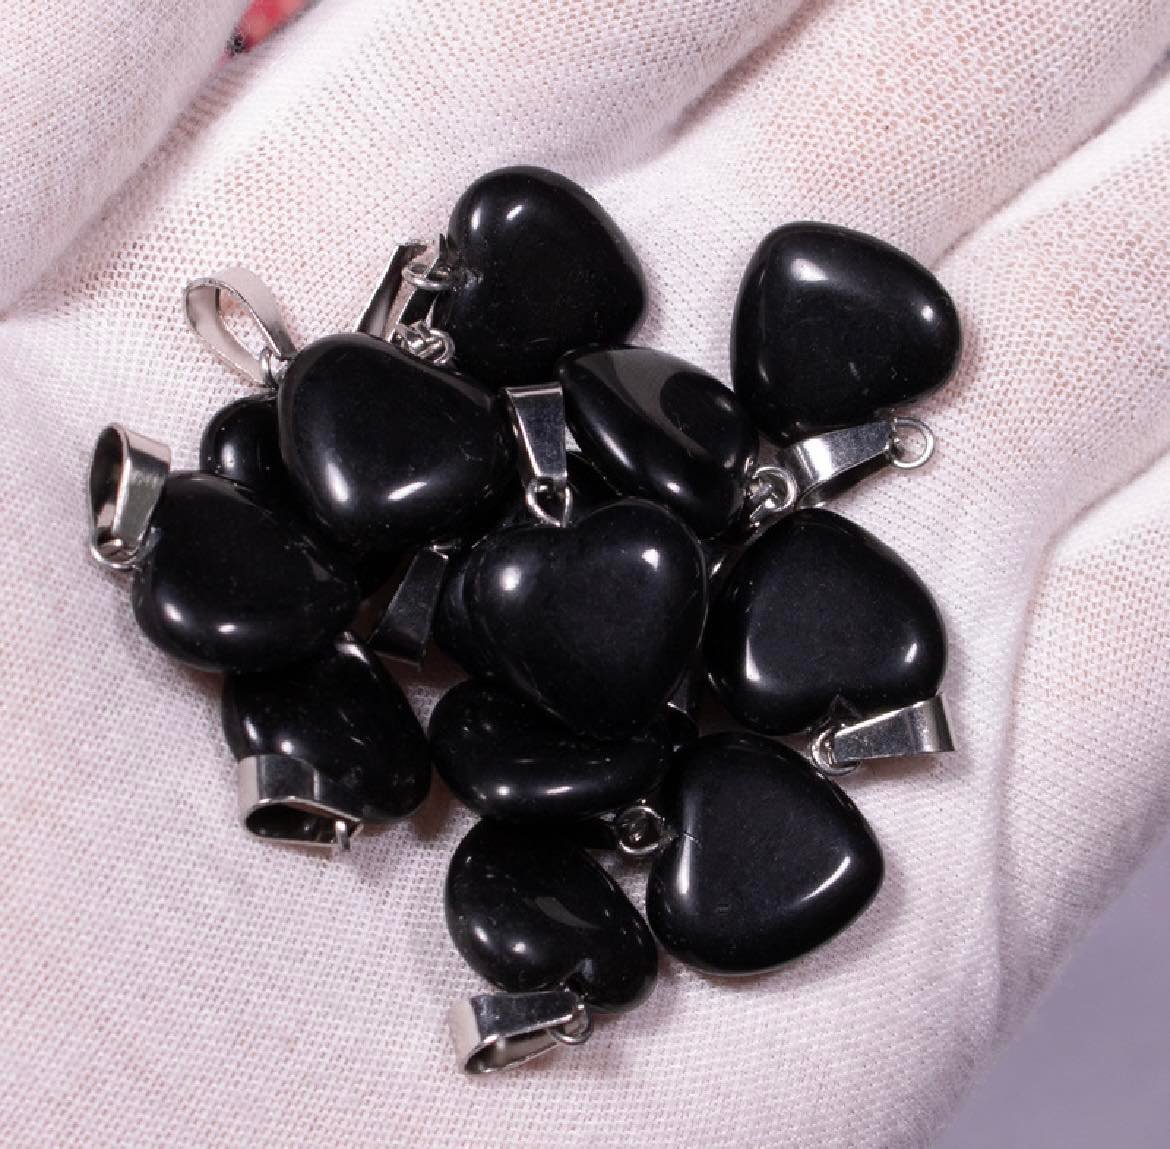 Black Obsidian Heart Pendant - 15mm - 2g - China - NEW123